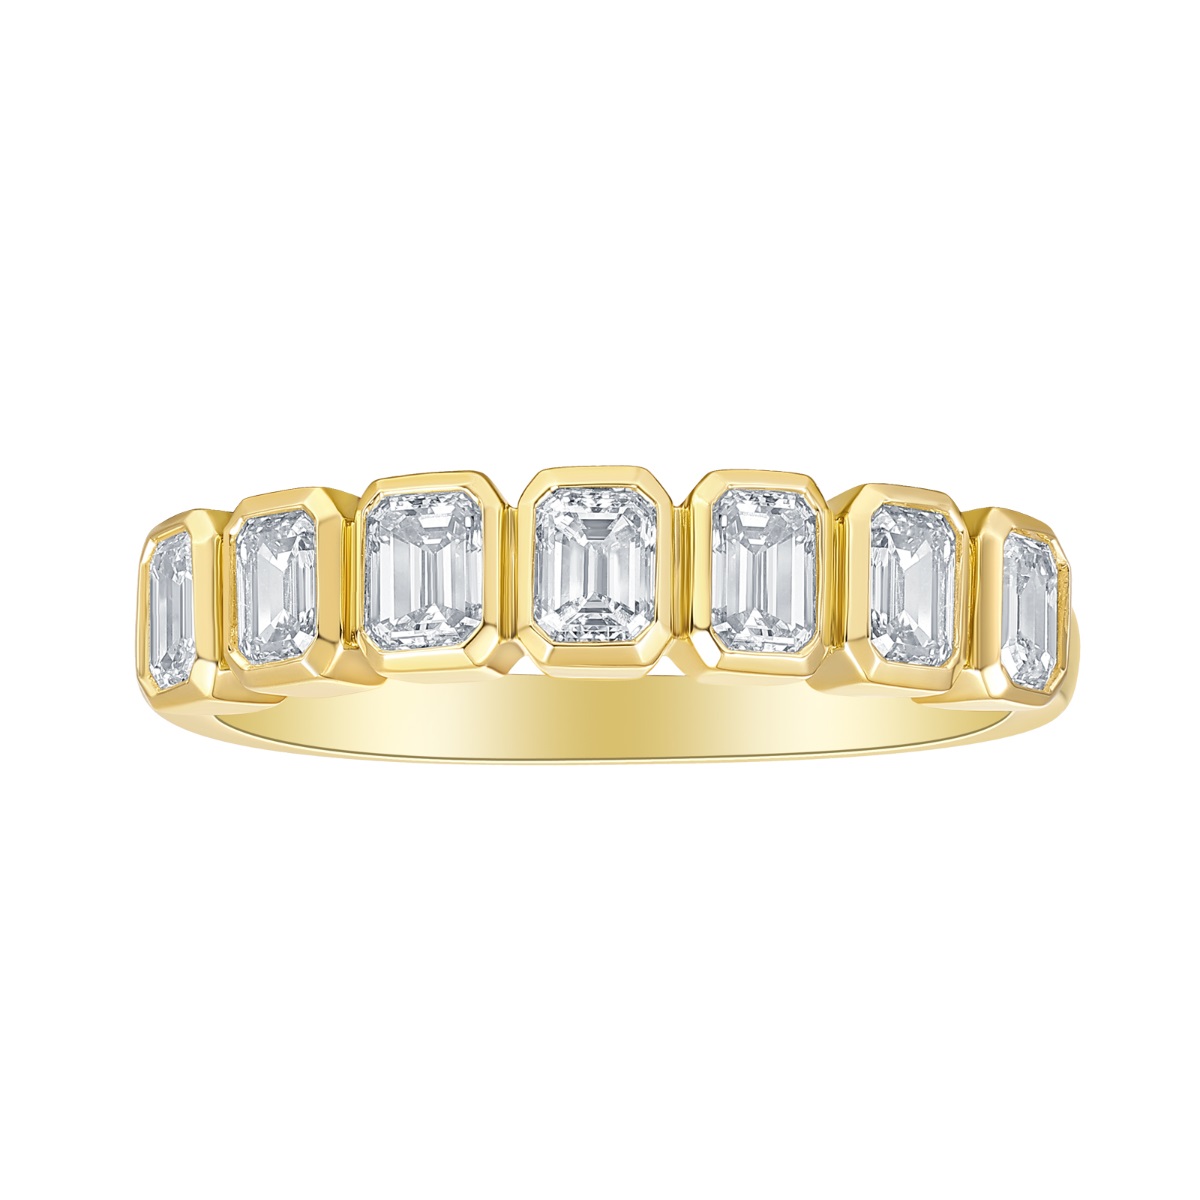 R36971WHT – 18K Yellow Gold Diamond Ring, 1.12 TCW